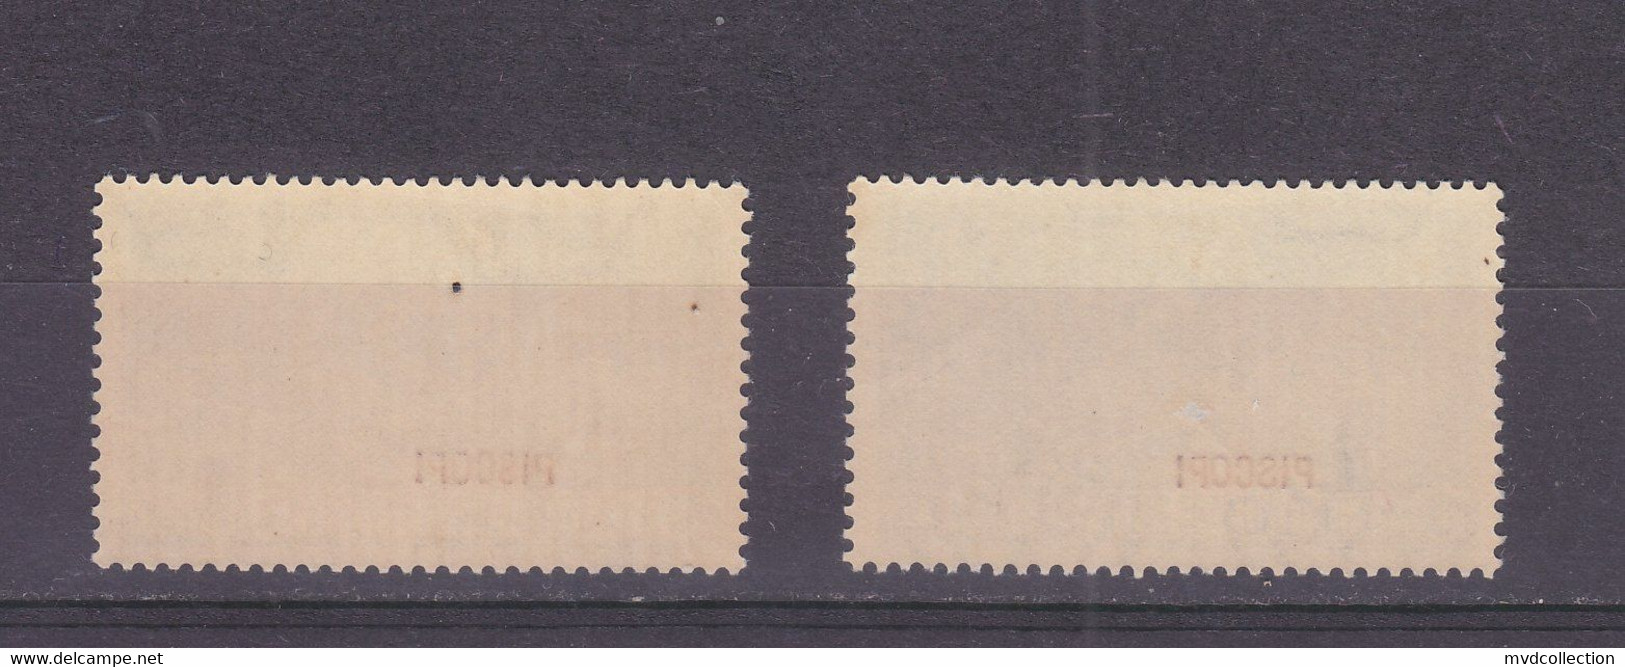 ITALY Lot CENTENARIO FERRUCCI Stamps Overprinted PISCOPI 1930 VF MH Original Gum - Aegean (Piscopi)